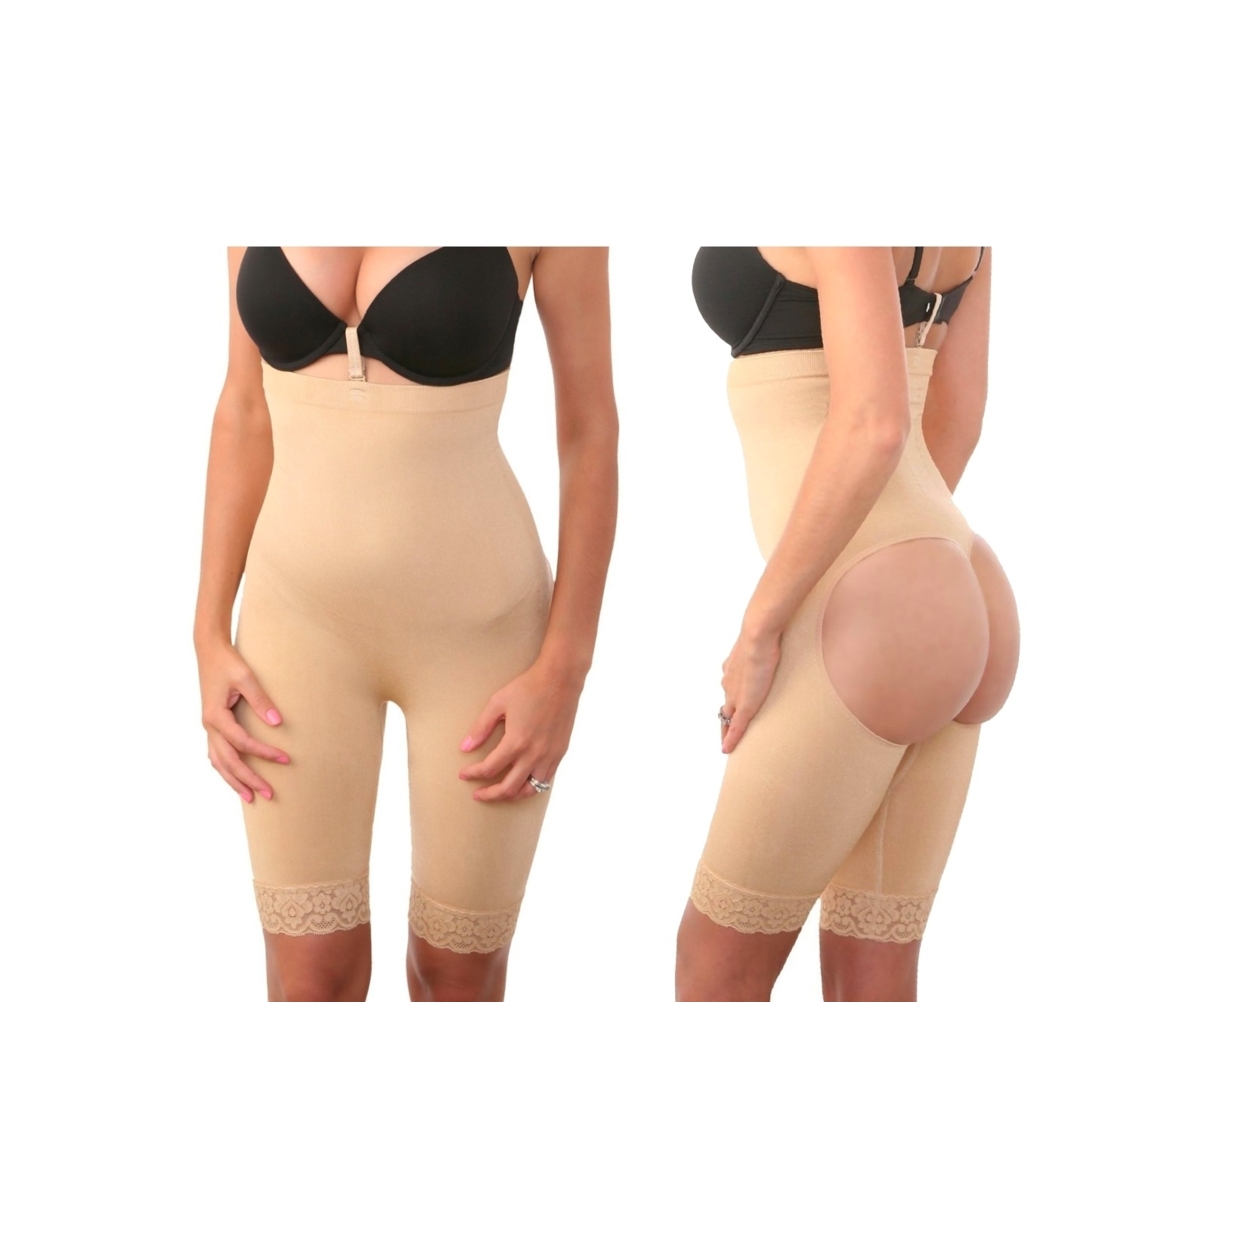 Women's Butt Uplifting Control Shaper - Black, L/XL